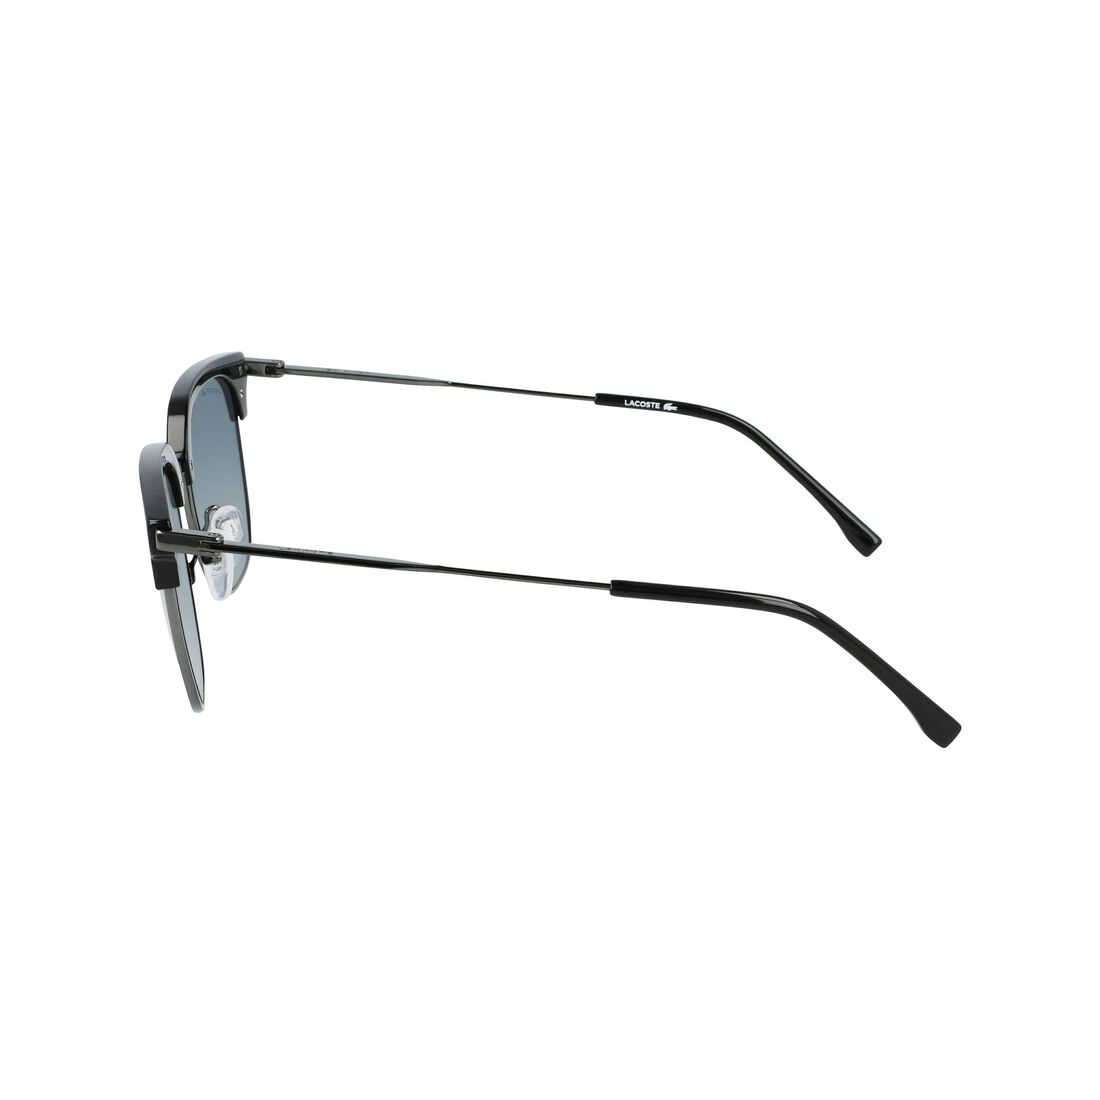 Lacoste Metal Sonnenbrille Herren Dunkelgrau | QZKG-40175